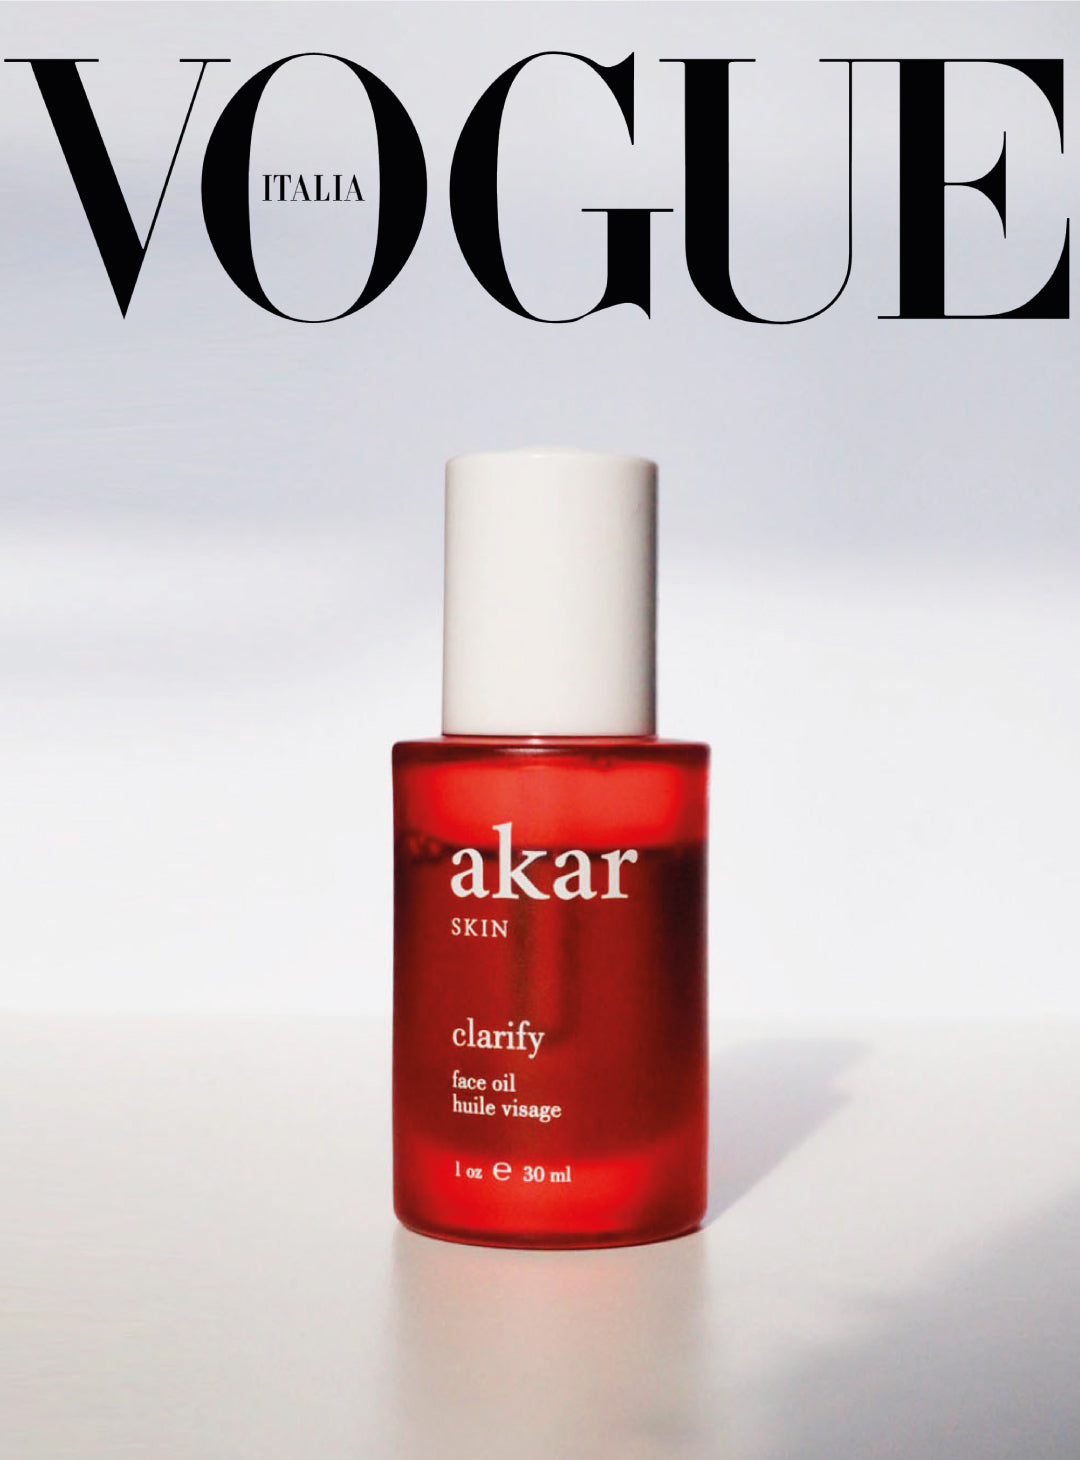 Vogue, italia, clarify, face oil, akar skin